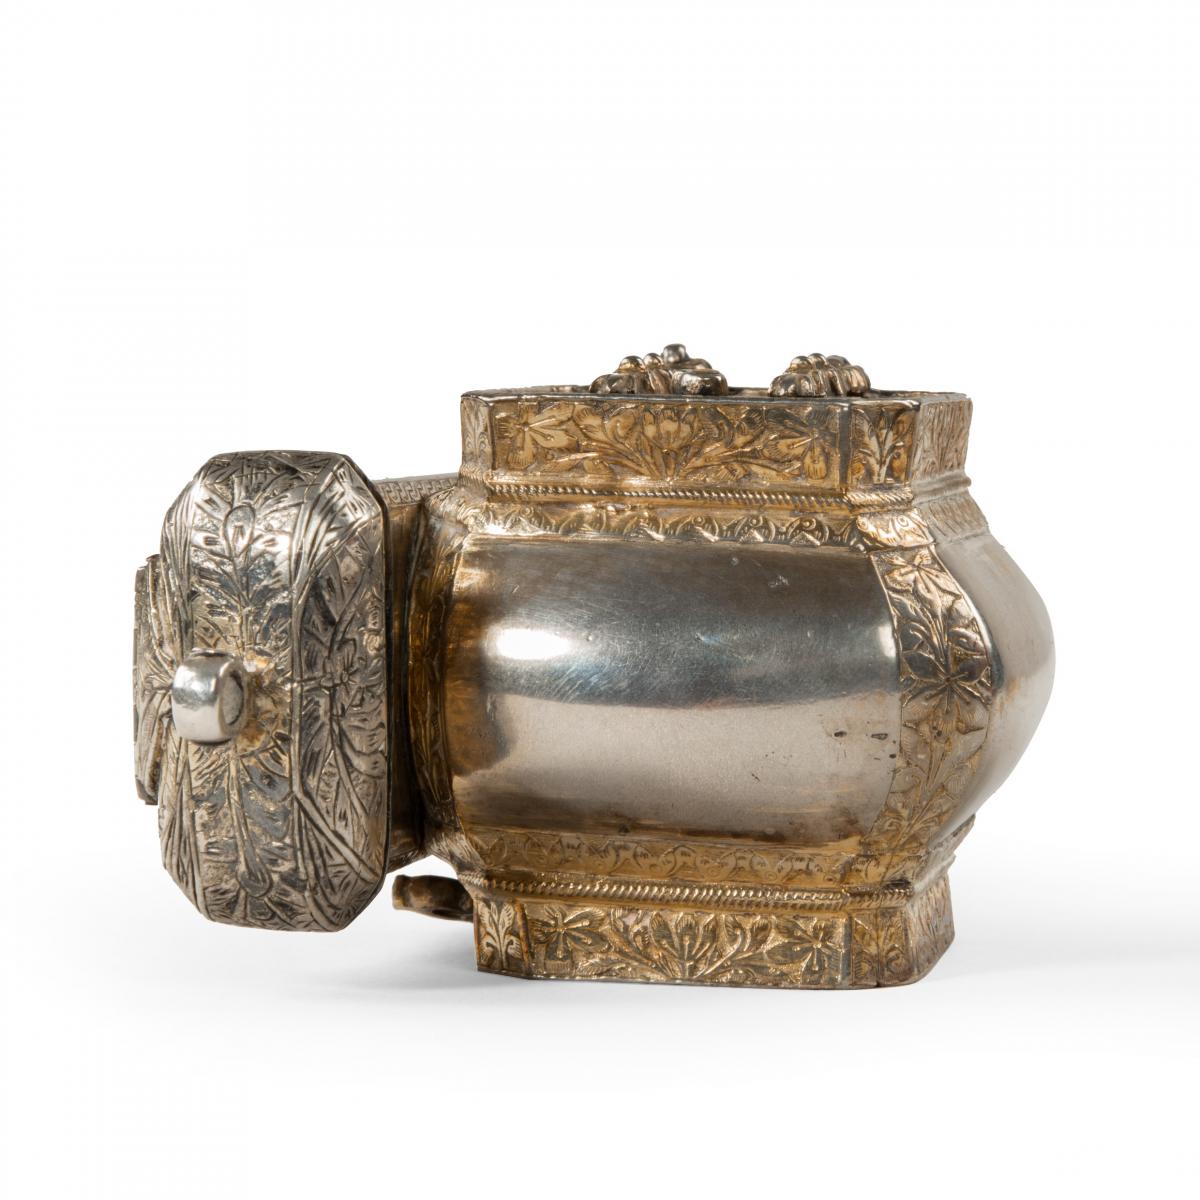 An Ottoman Empire parcel-gilt silver qalamdan